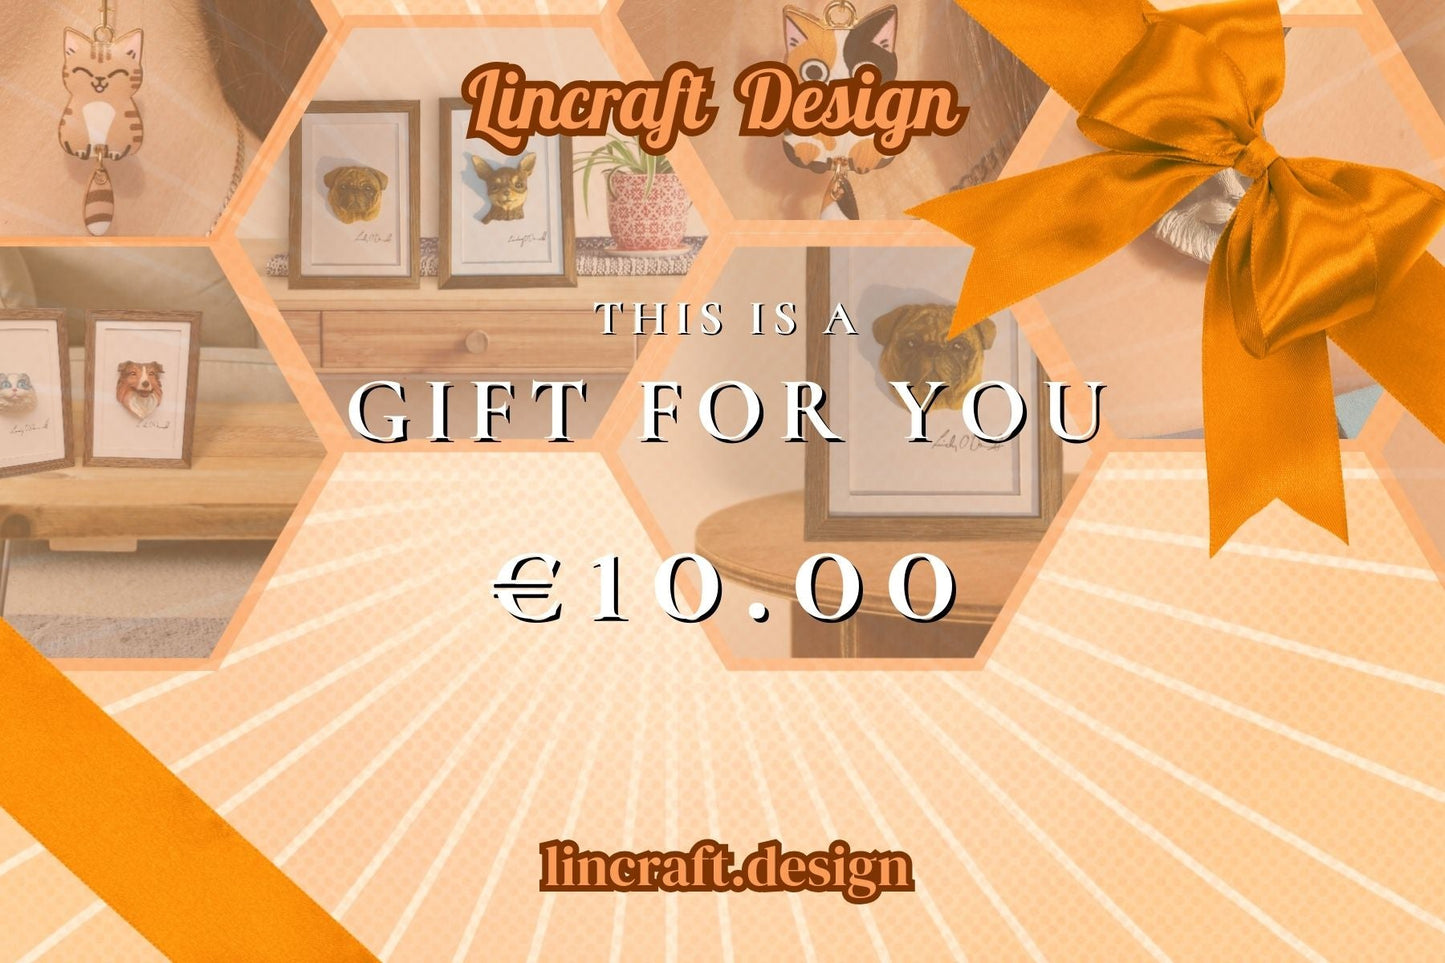 Lincraft Design Gift Card - Lincraft Design